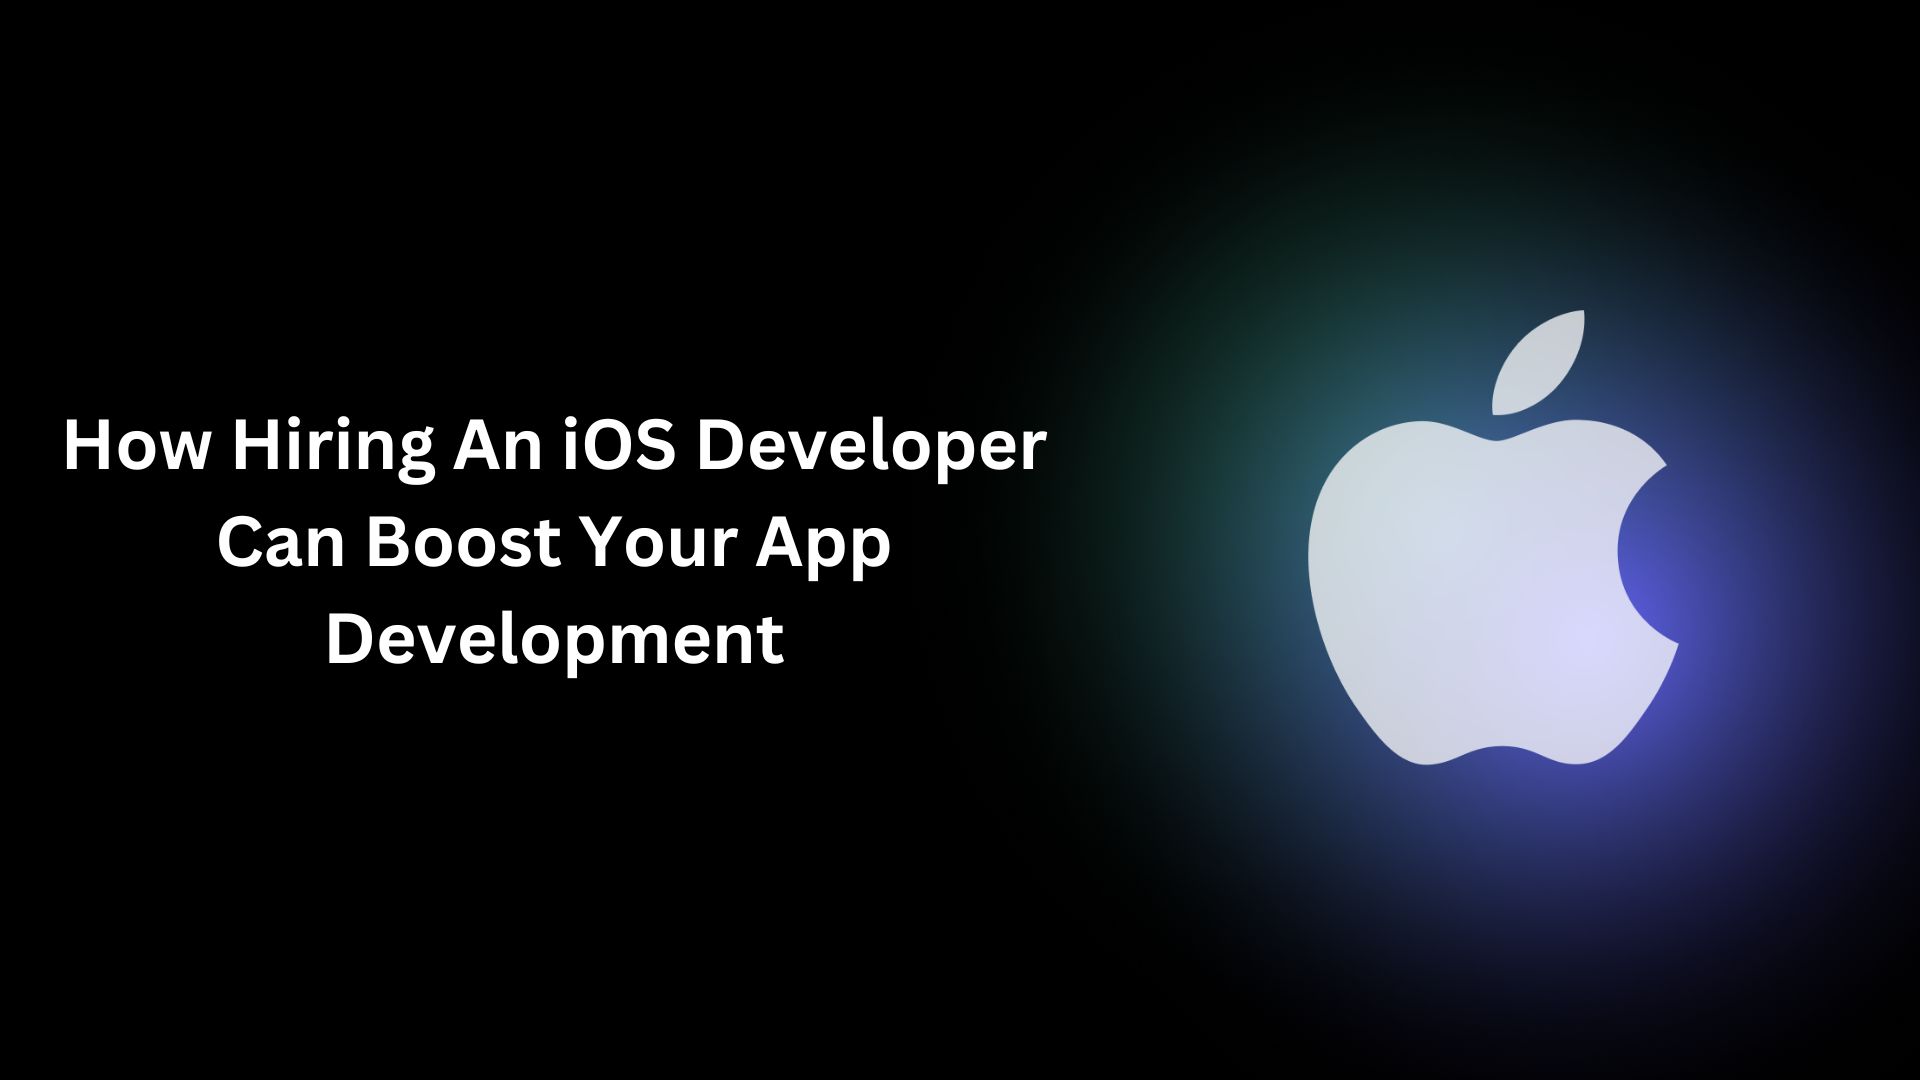 iOS developer